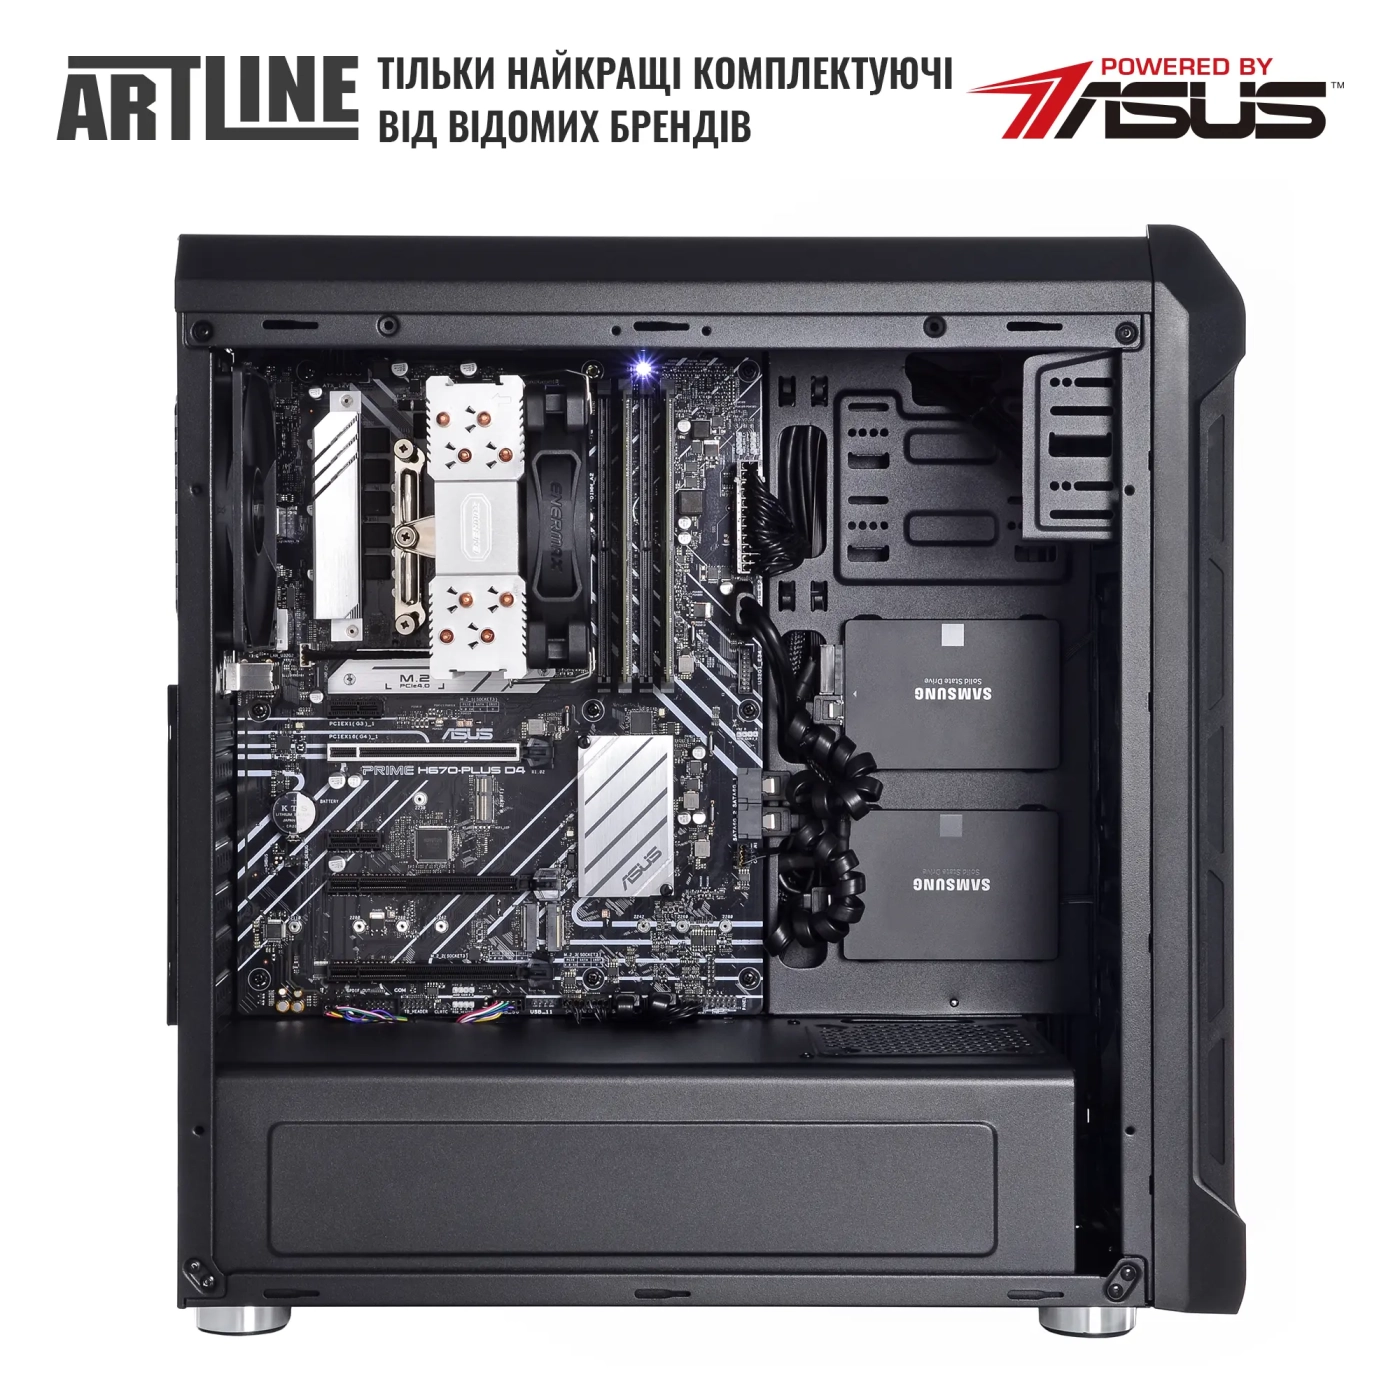 Купити Сервер ARTLINE Business T25 (T25v44) - фото 4